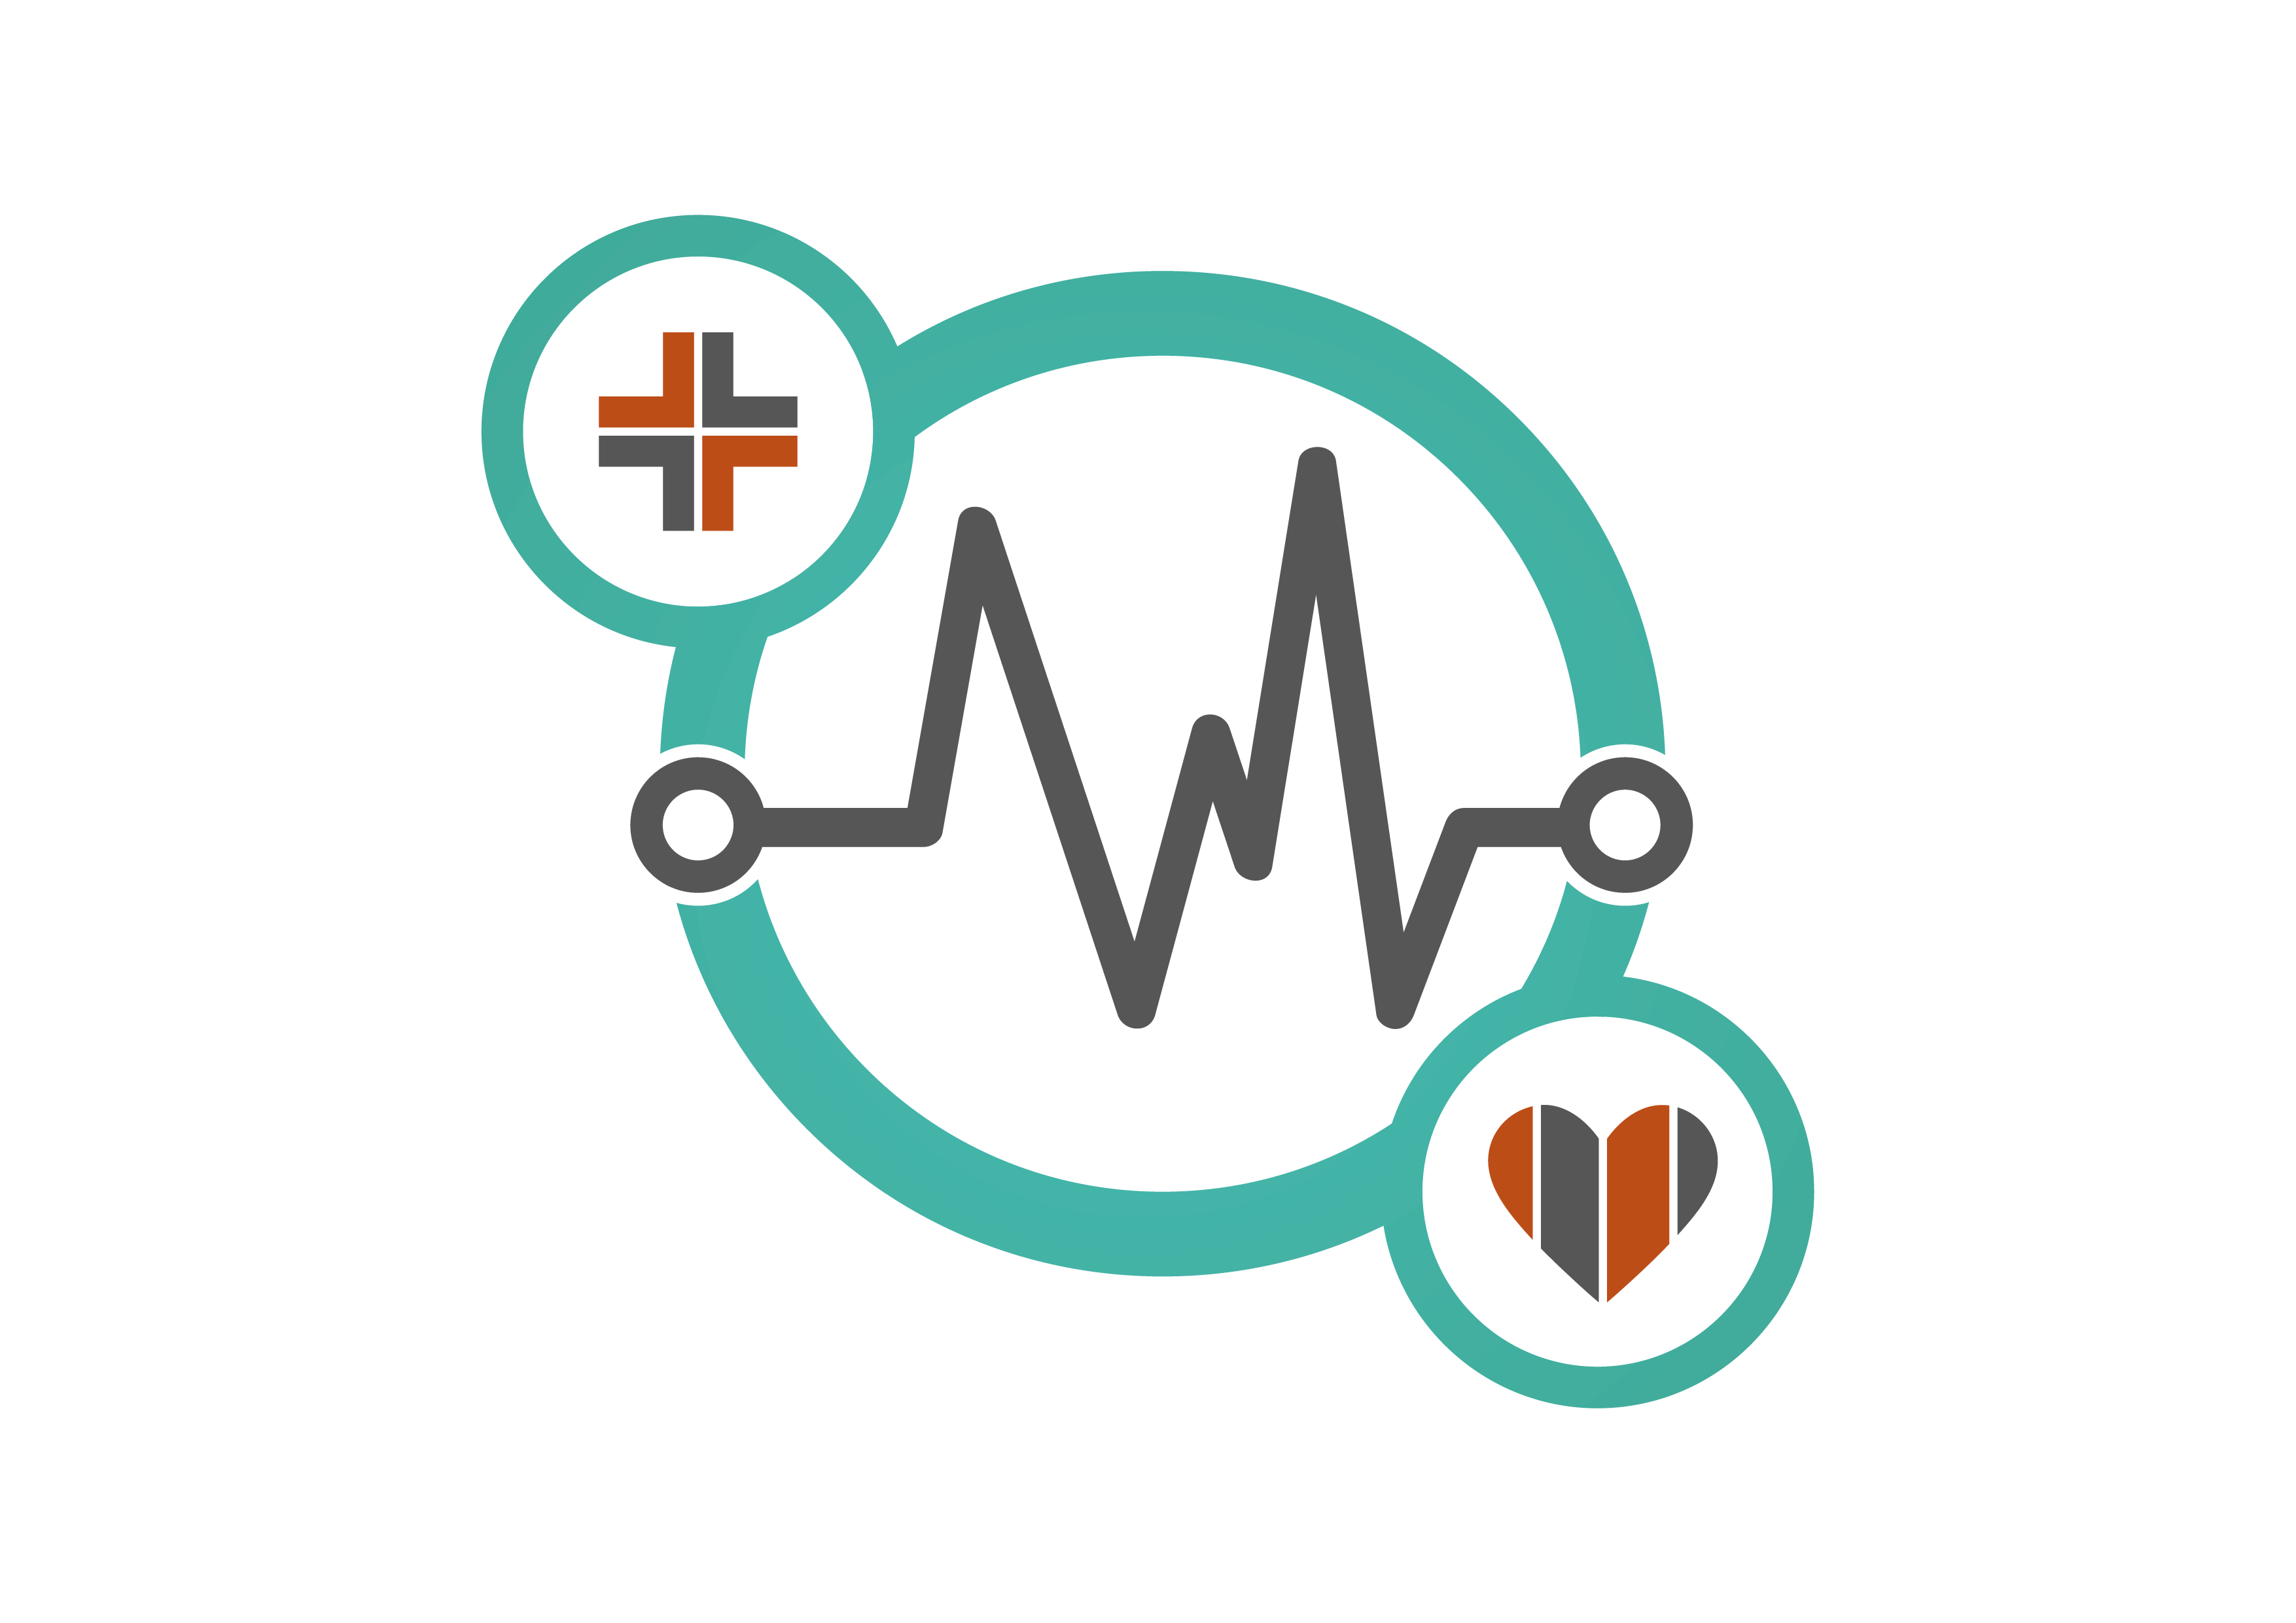 siemens healthcare logo